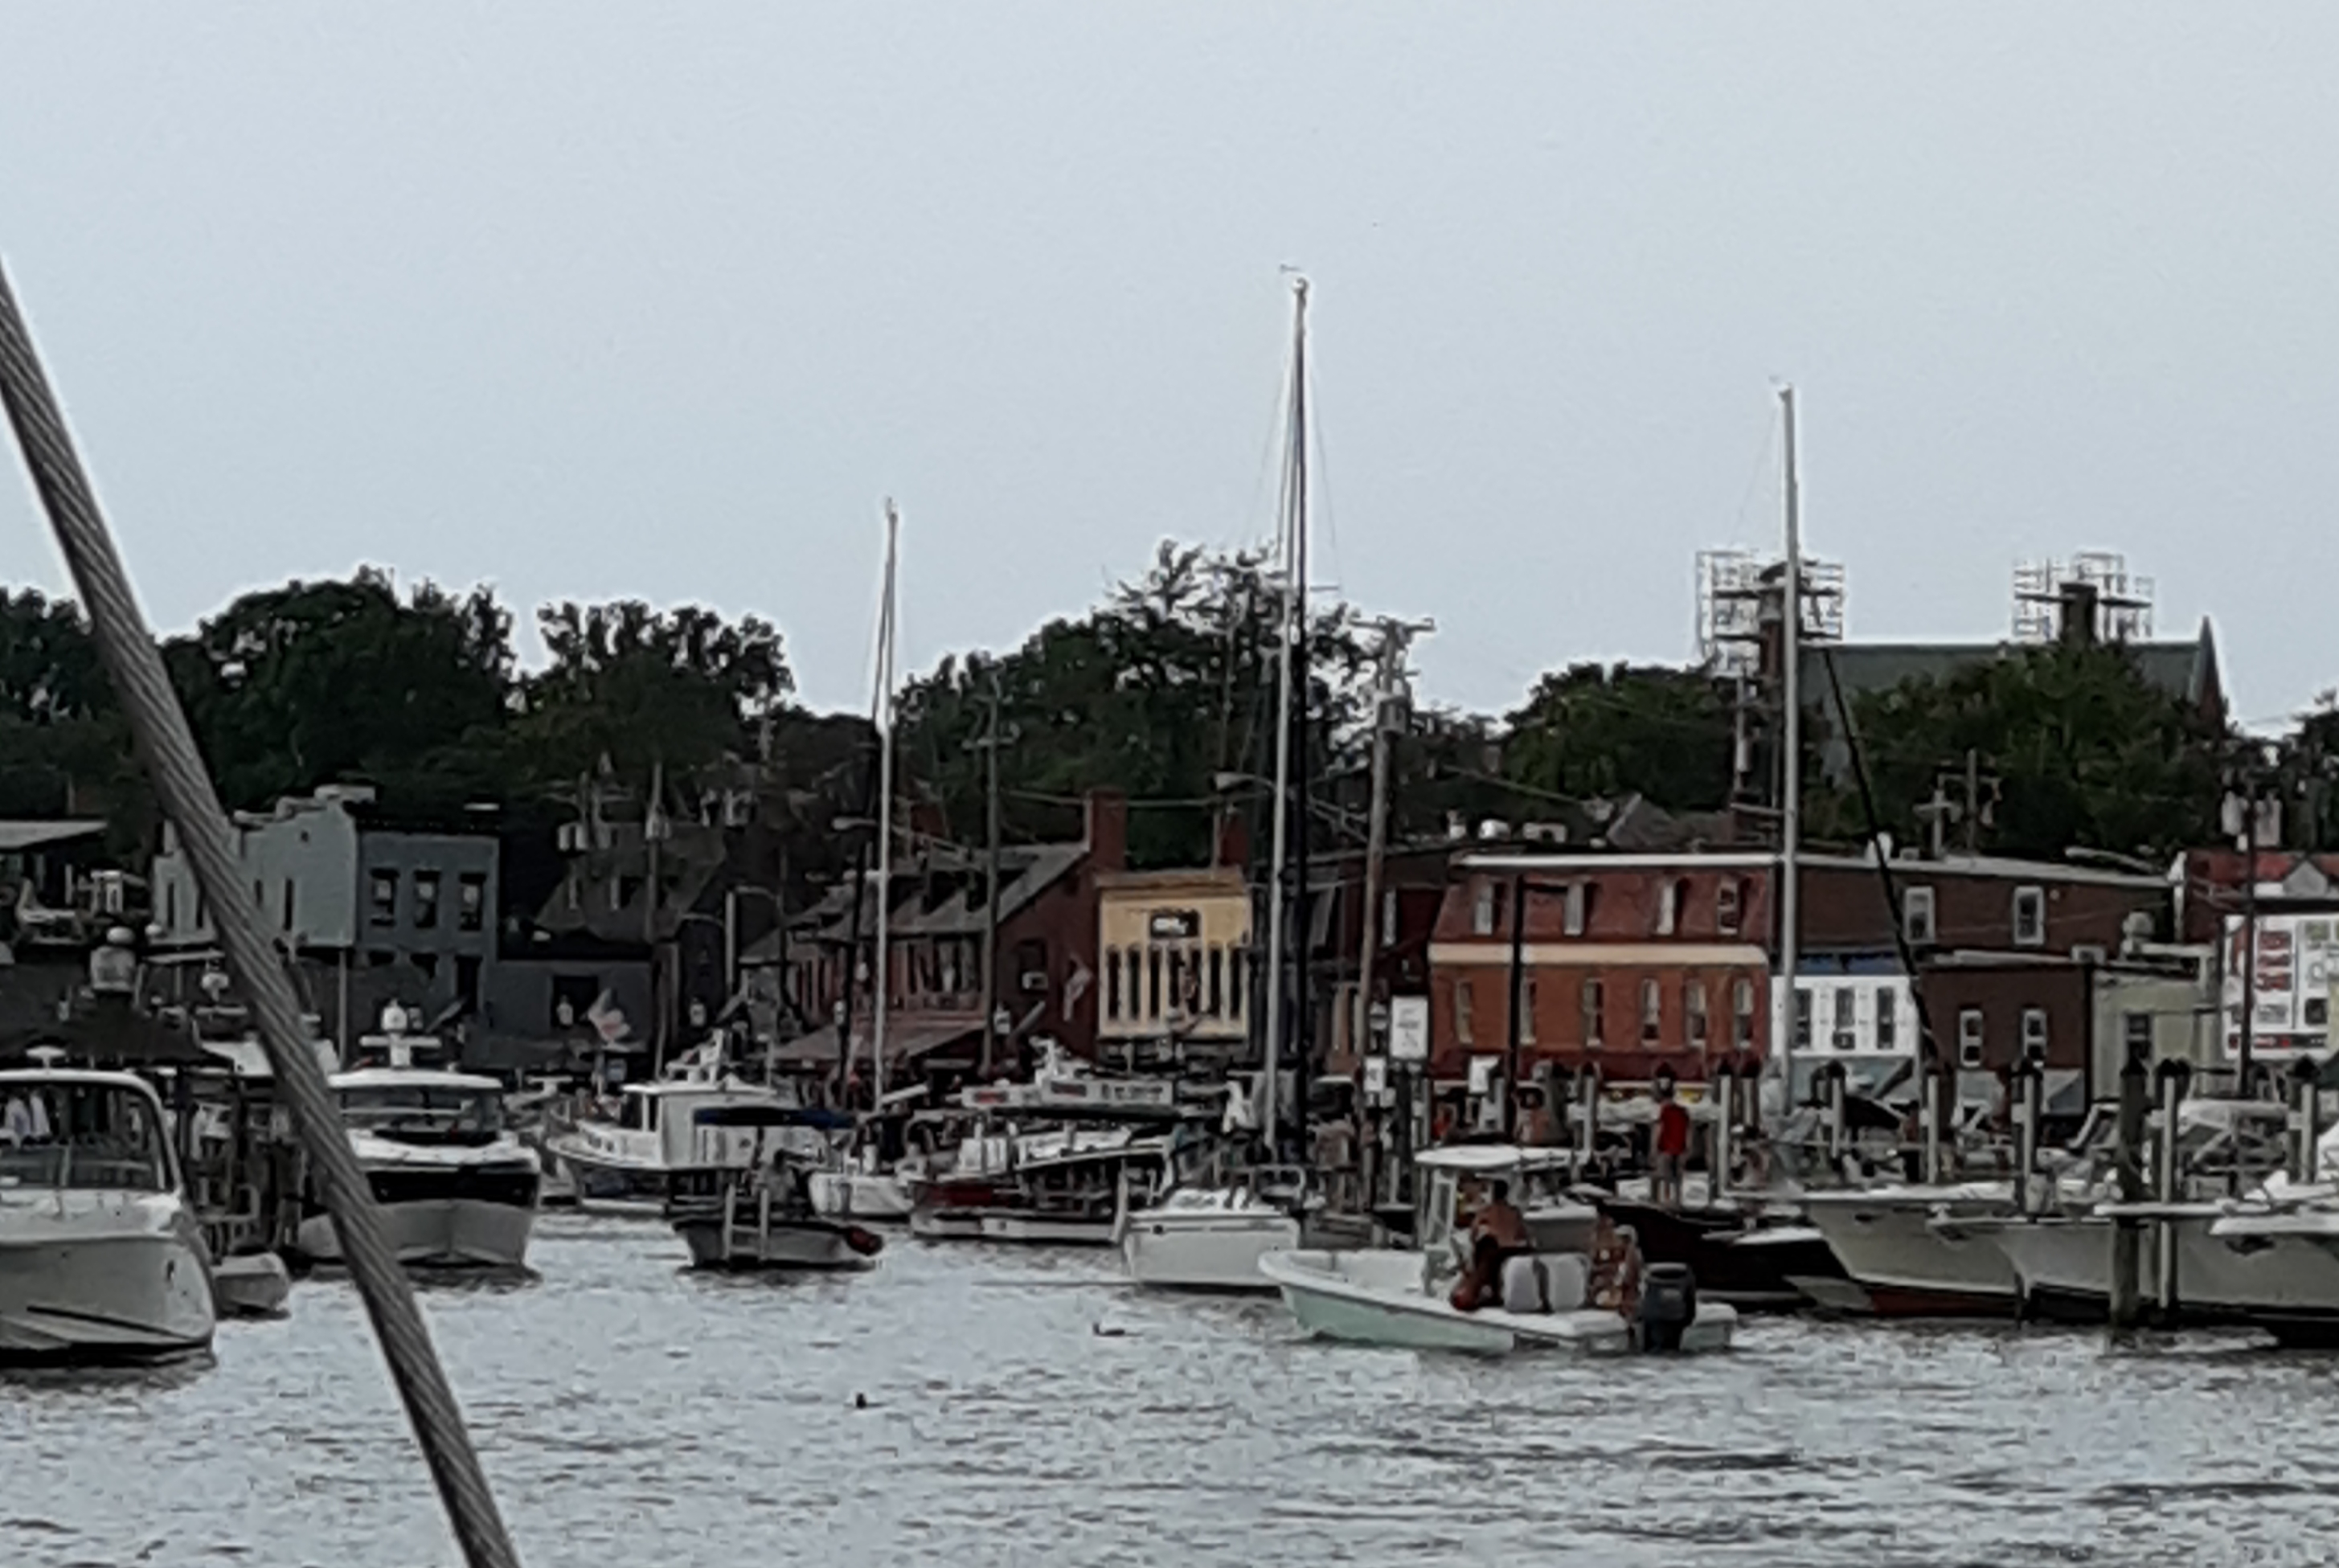 Annapolis Harbor full of boats